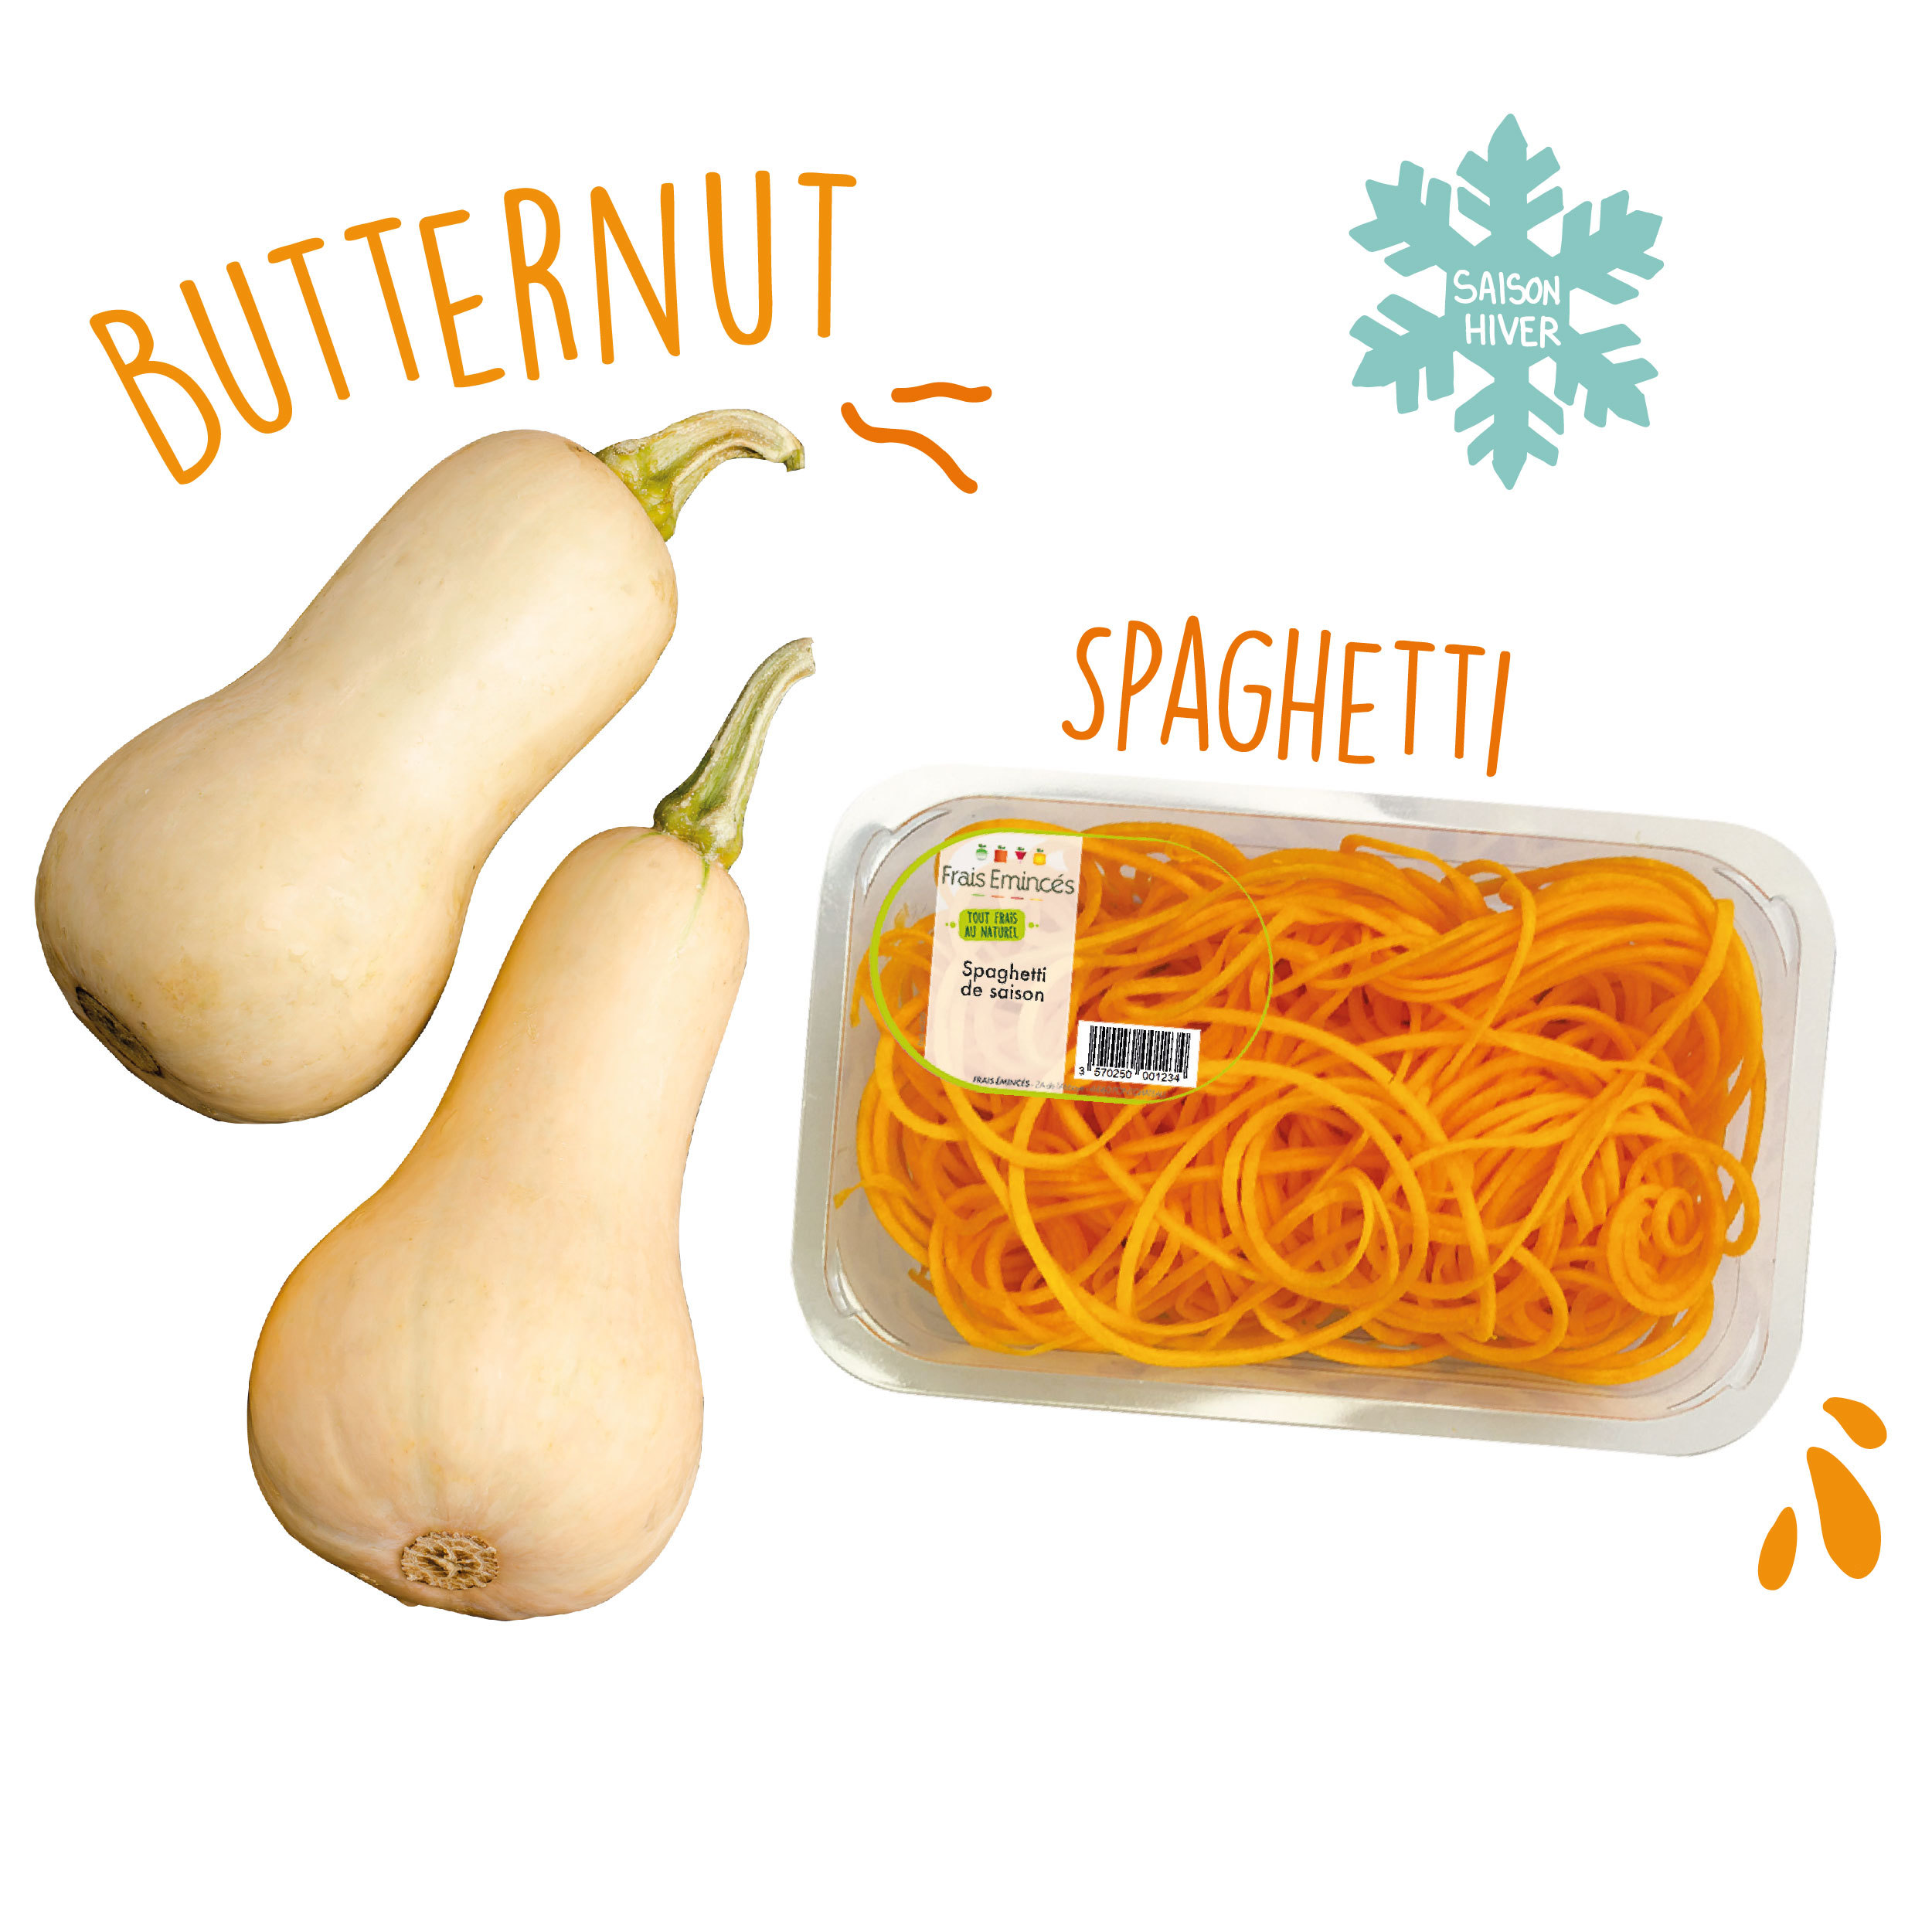 Spaghetti saison - Hiver